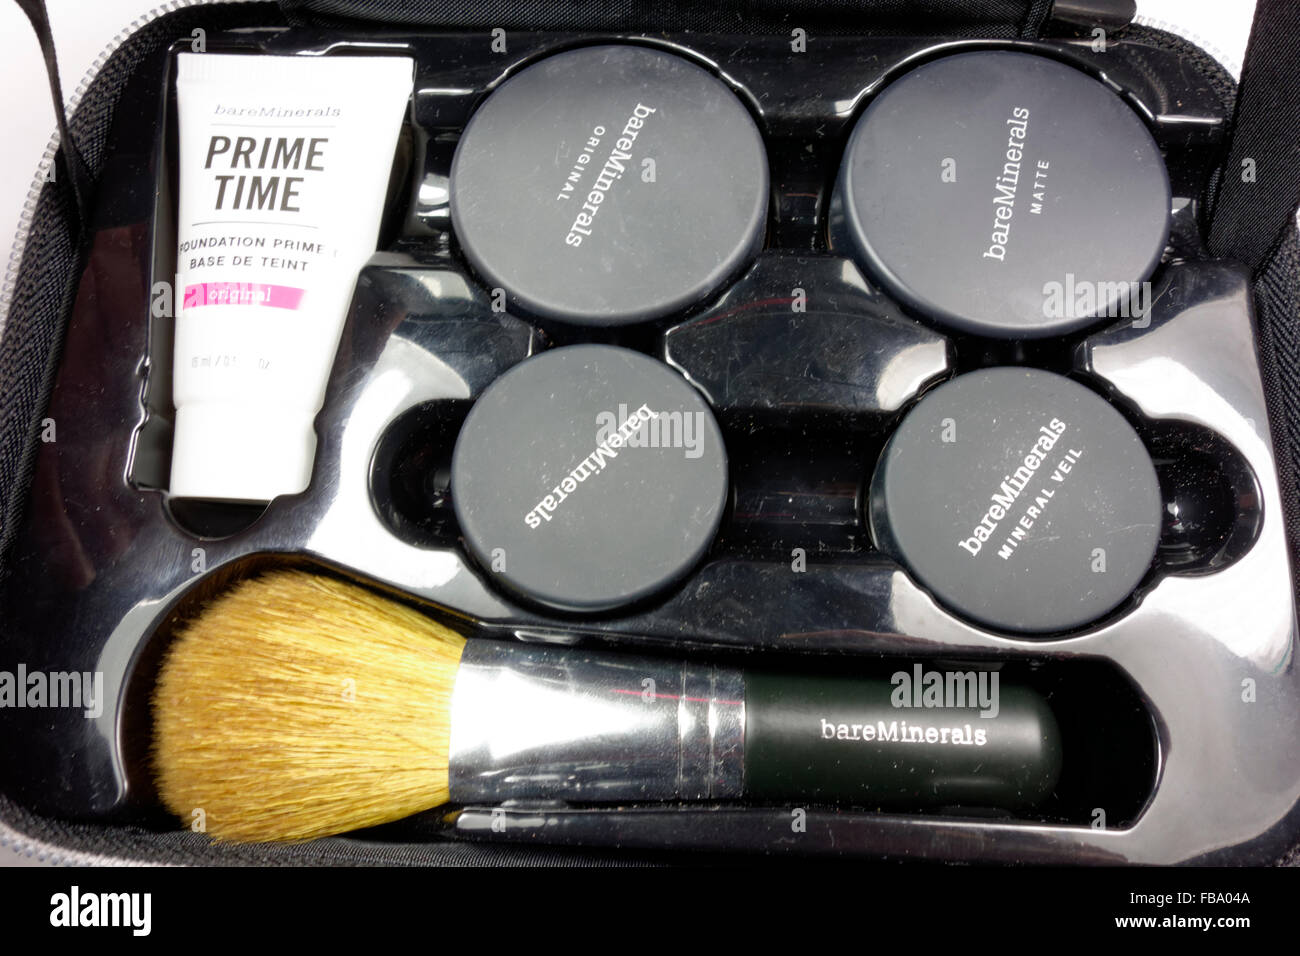 Maquillage minéral Bareminerals kit. Banque D'Images